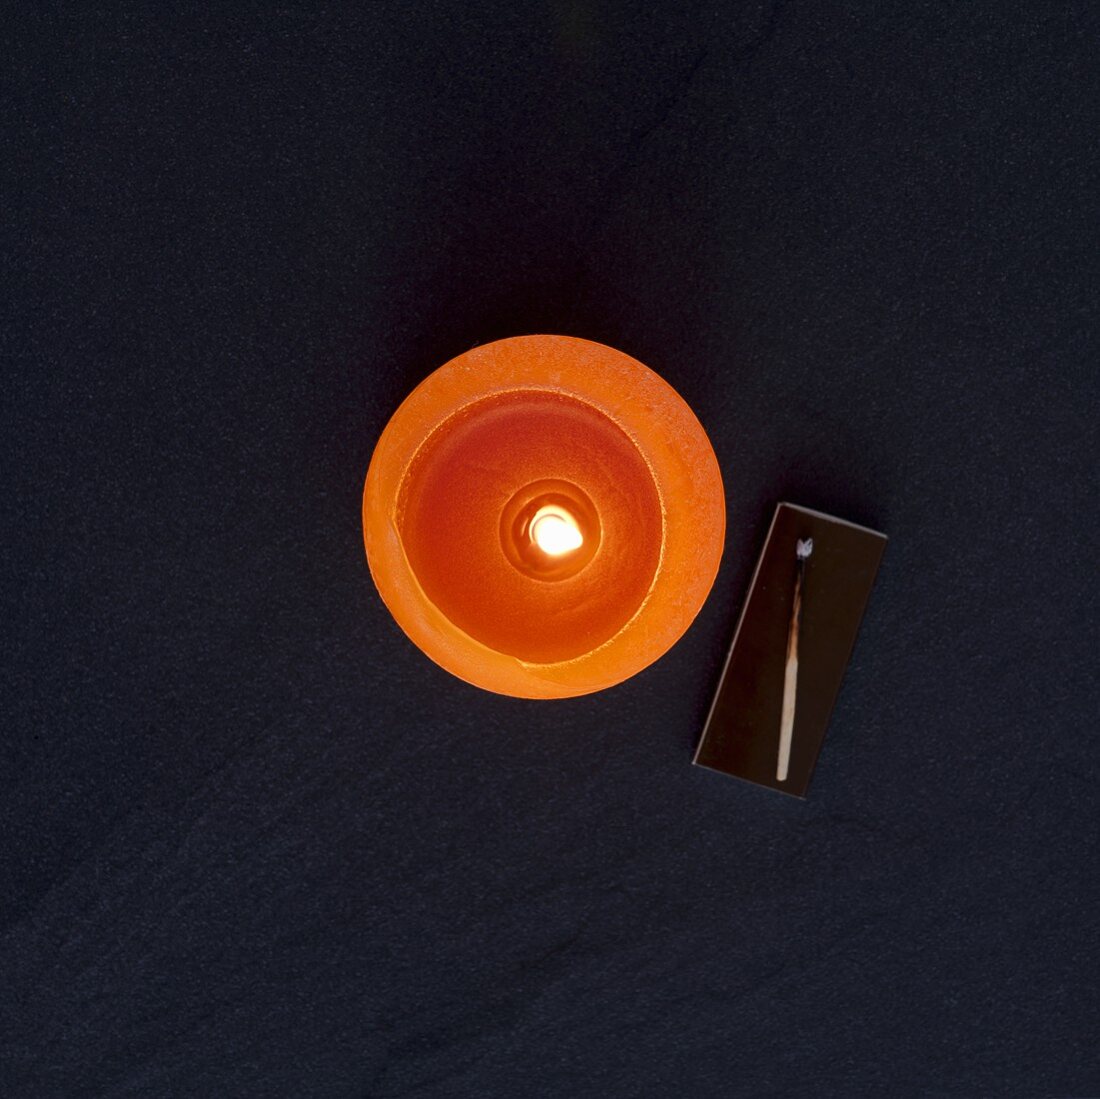 Orange candle (overhead view)